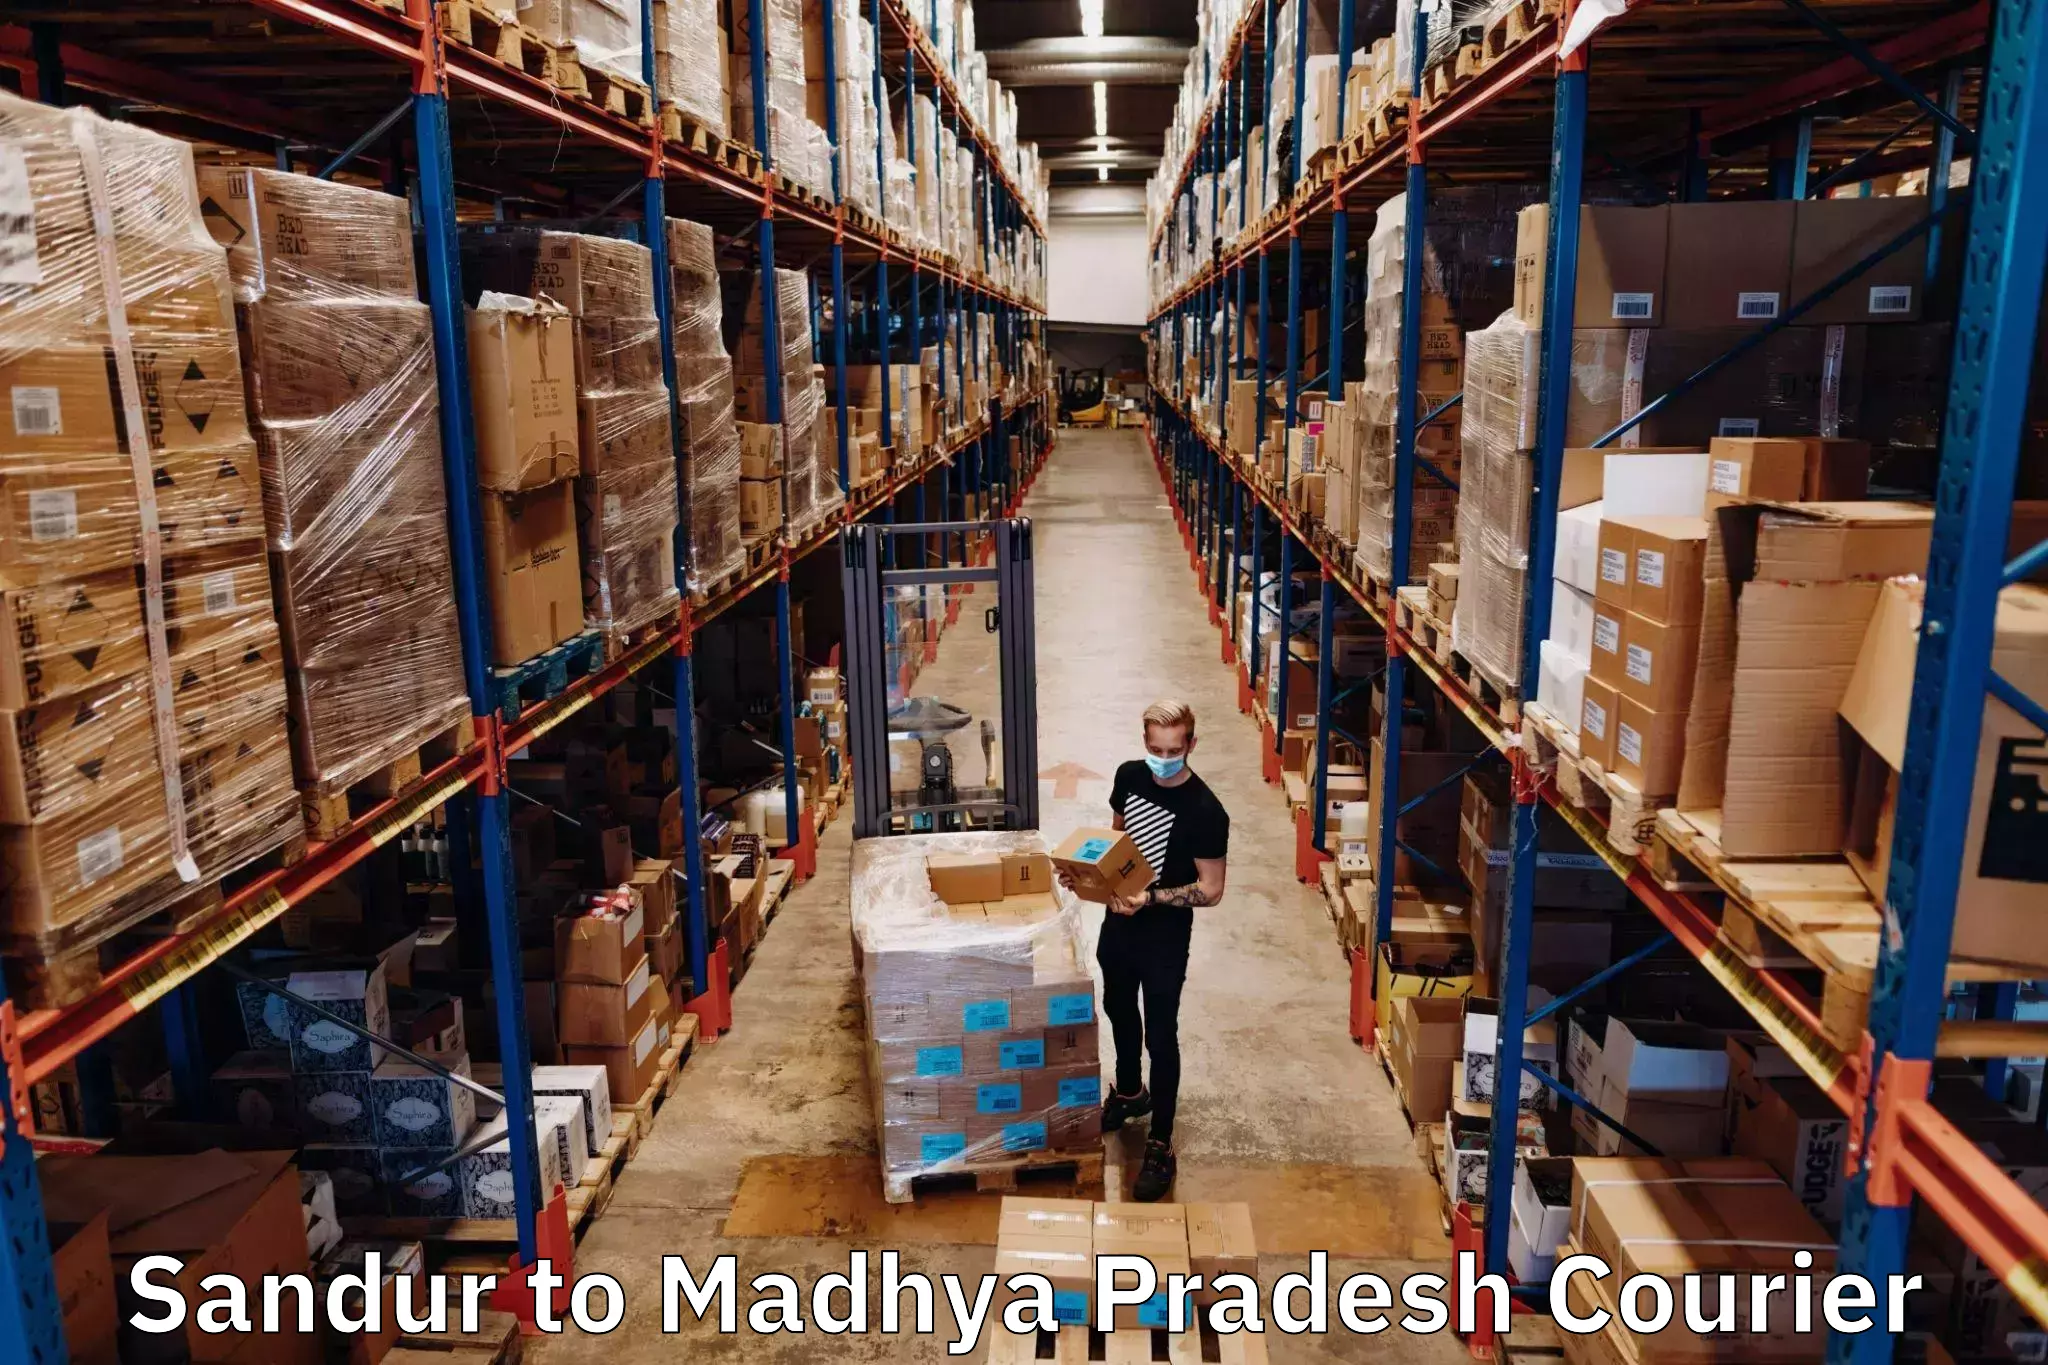 International parcel service Sandur to Raghogarh